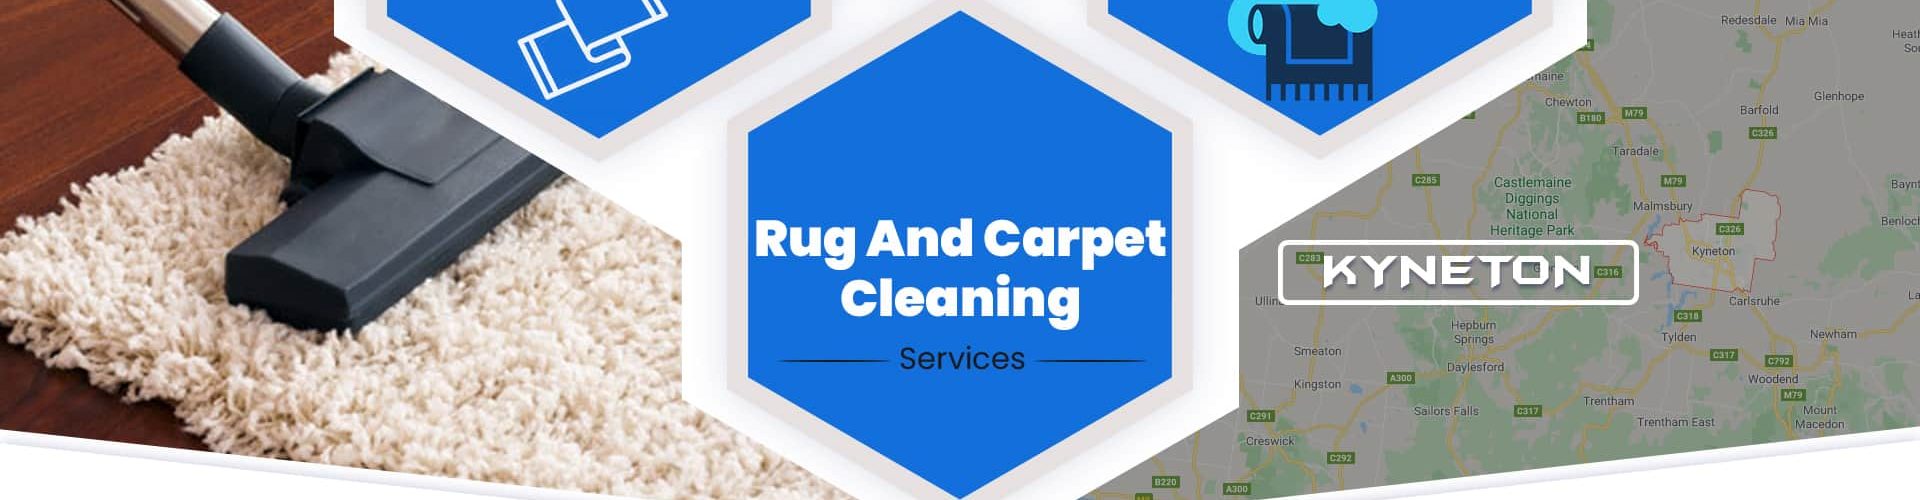 Rug and Carpet Cleaning Kyneton